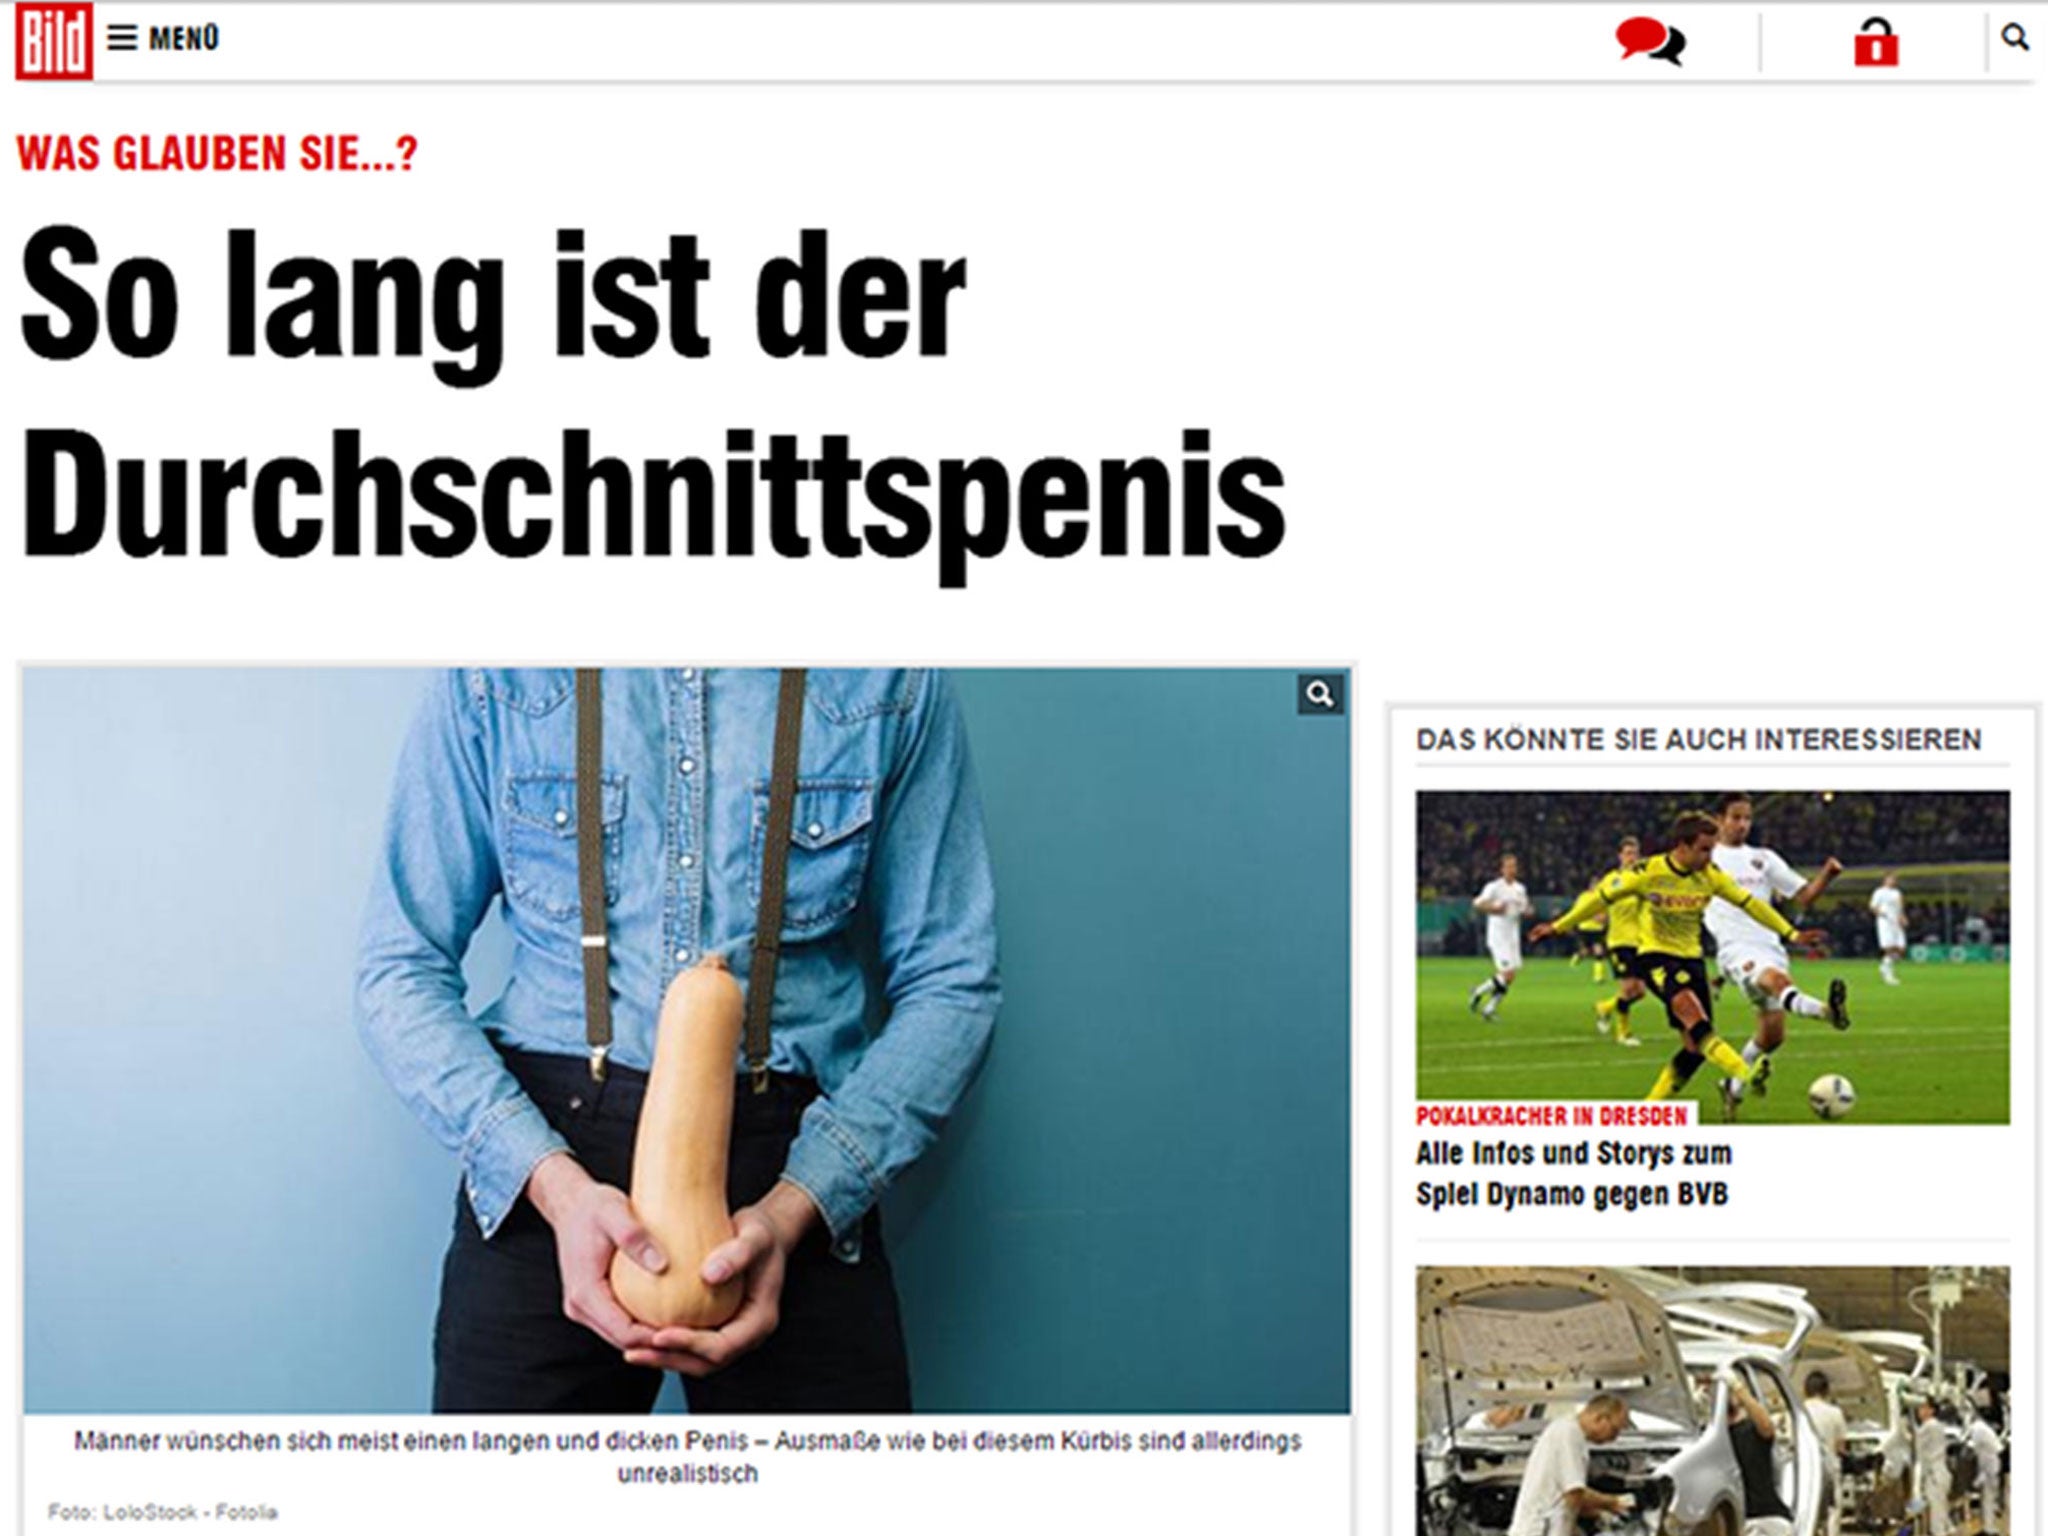 The German tabloid Bild